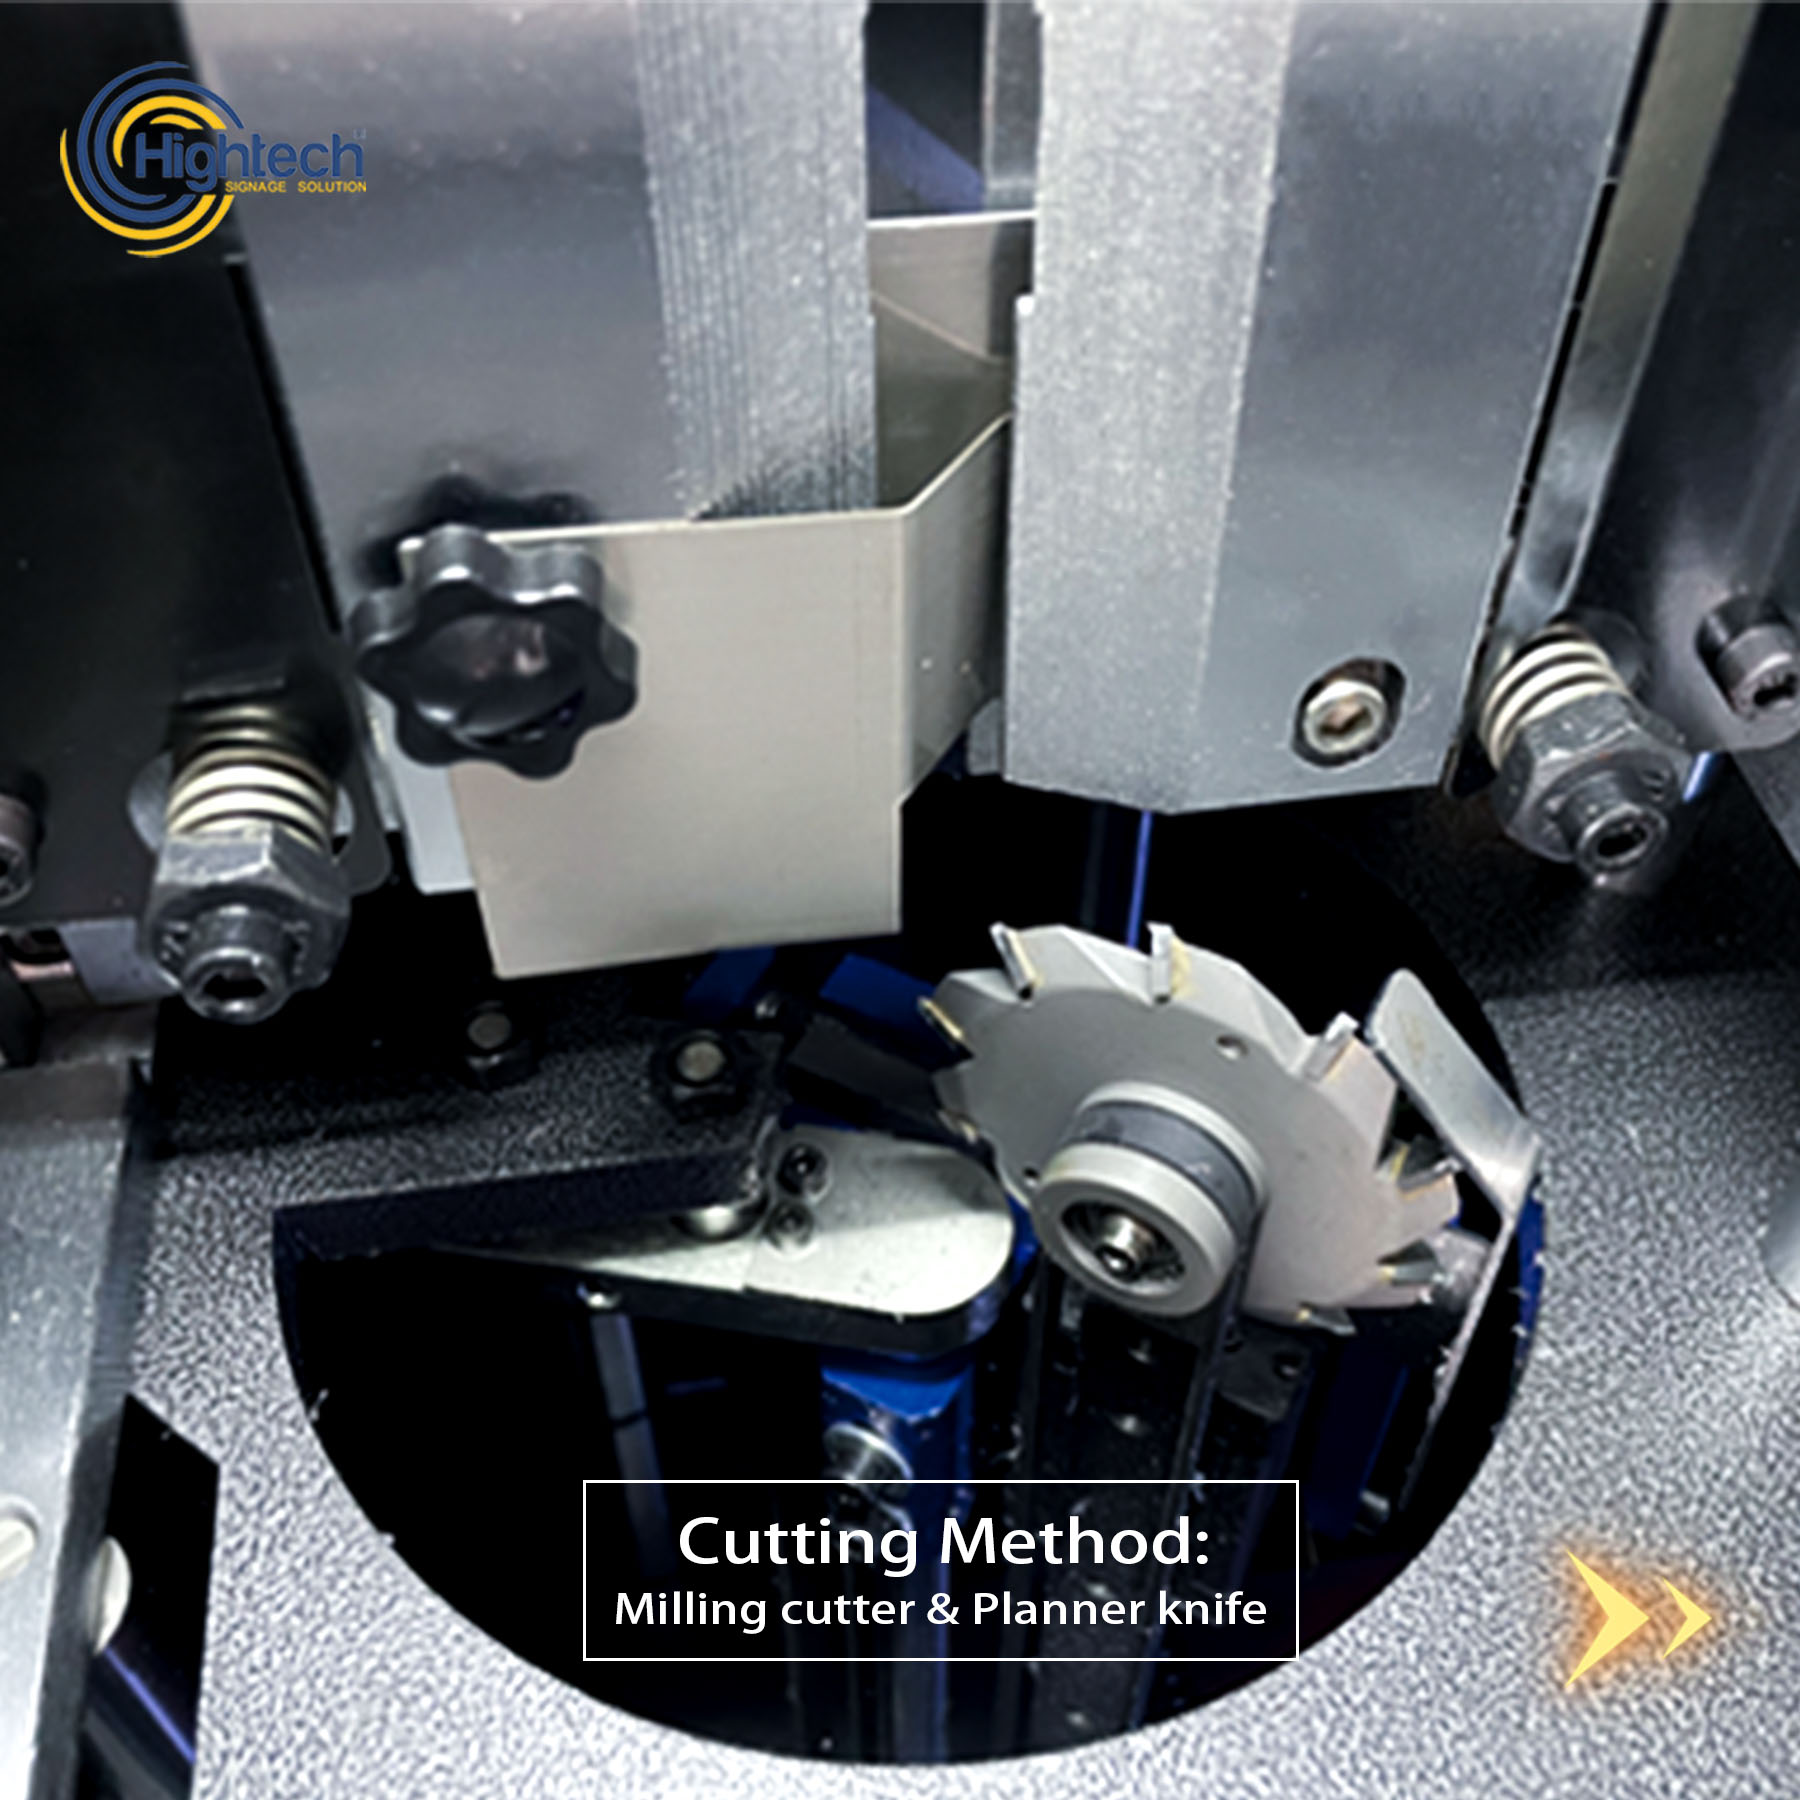 Do hightech laser welding machine from China manufacturer generate radiation during work